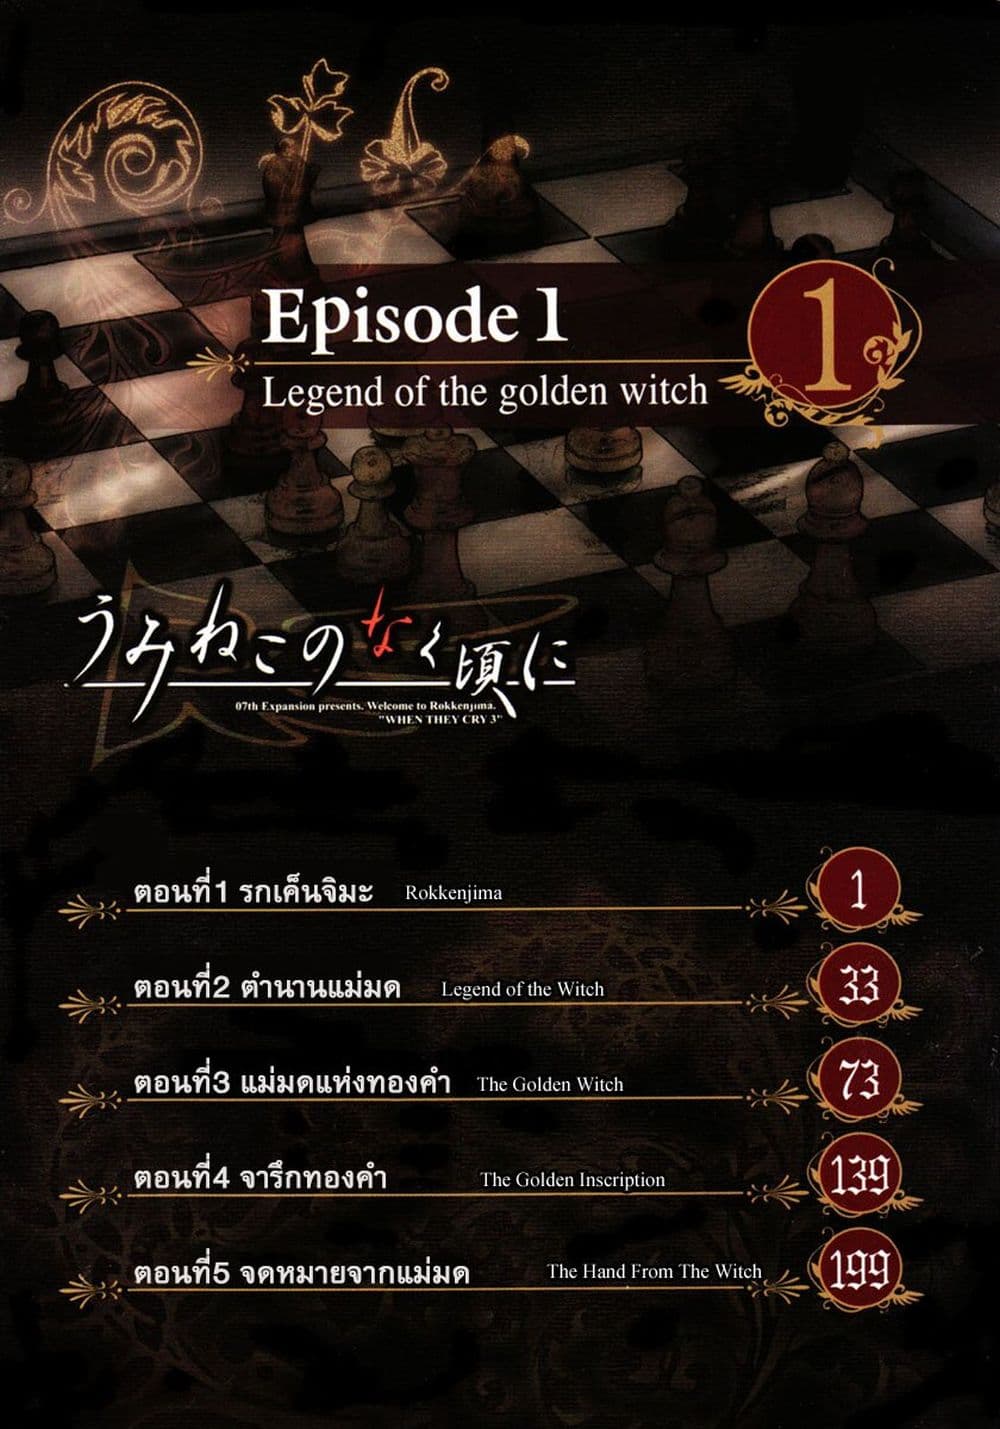 Umineko no Naku Koro ni Episode 1 Legend of the Golden Witch Chapter1 2